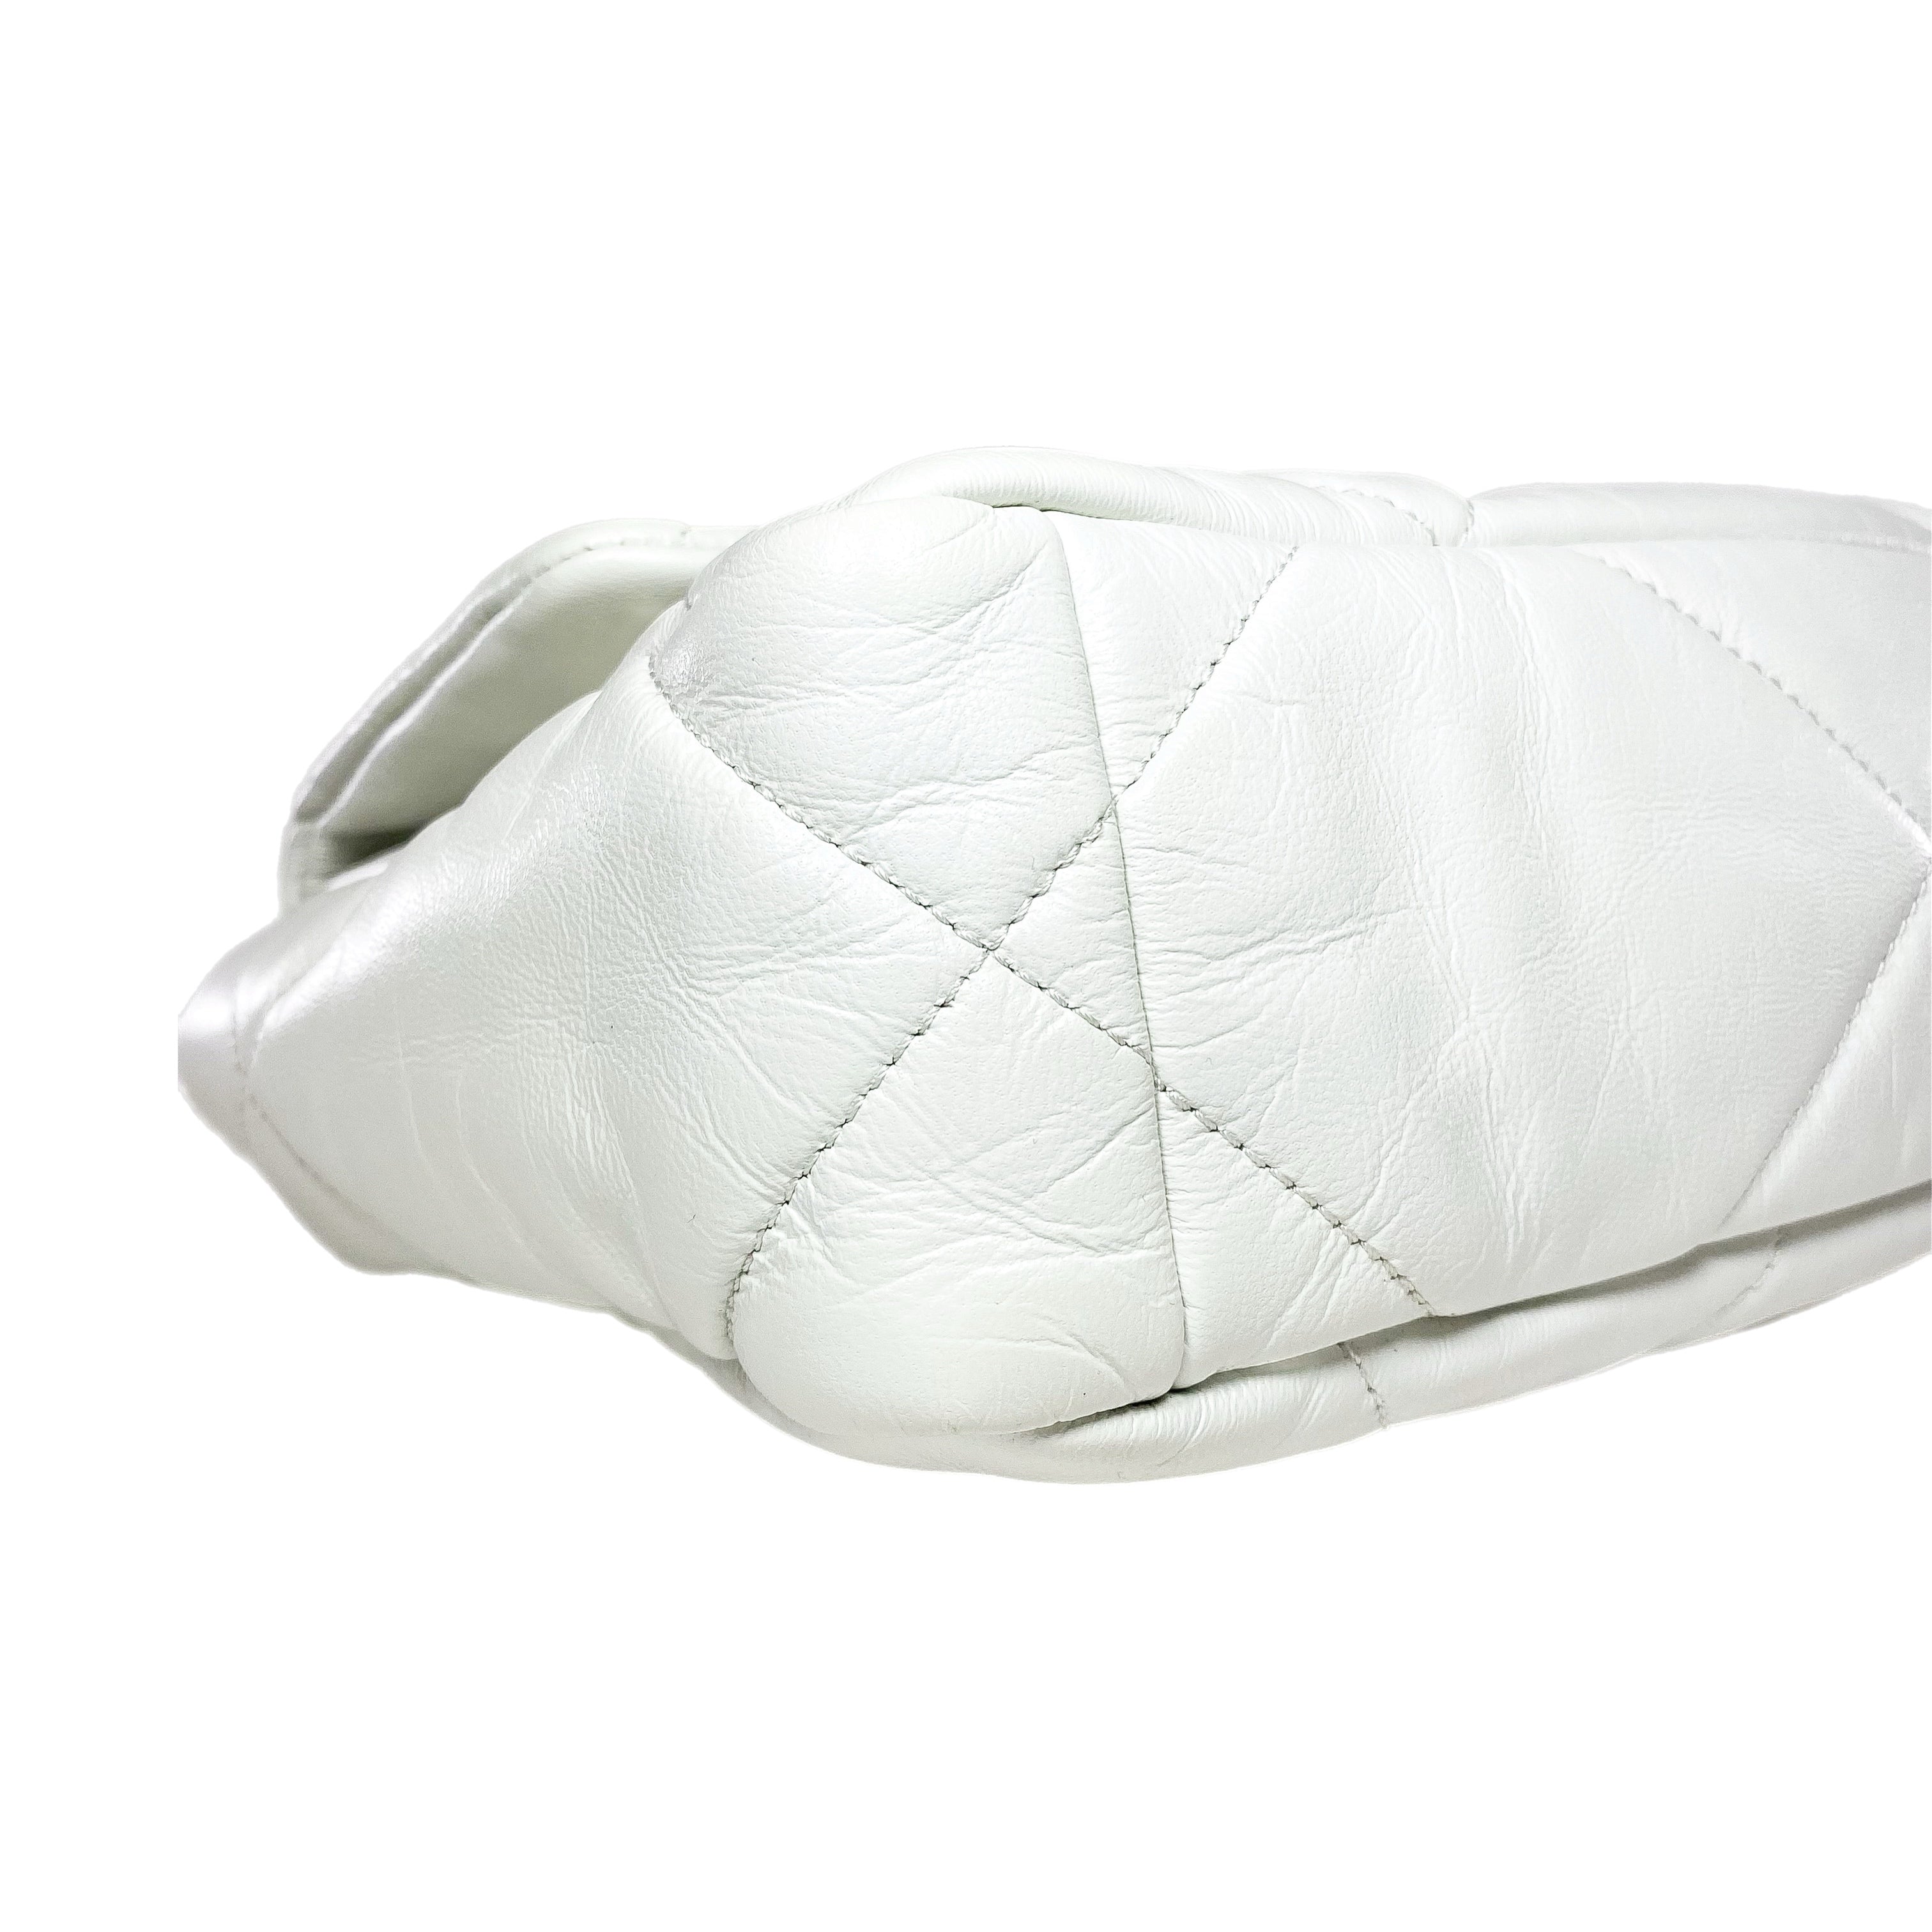 Chanel 19 White Medium Flap Bag